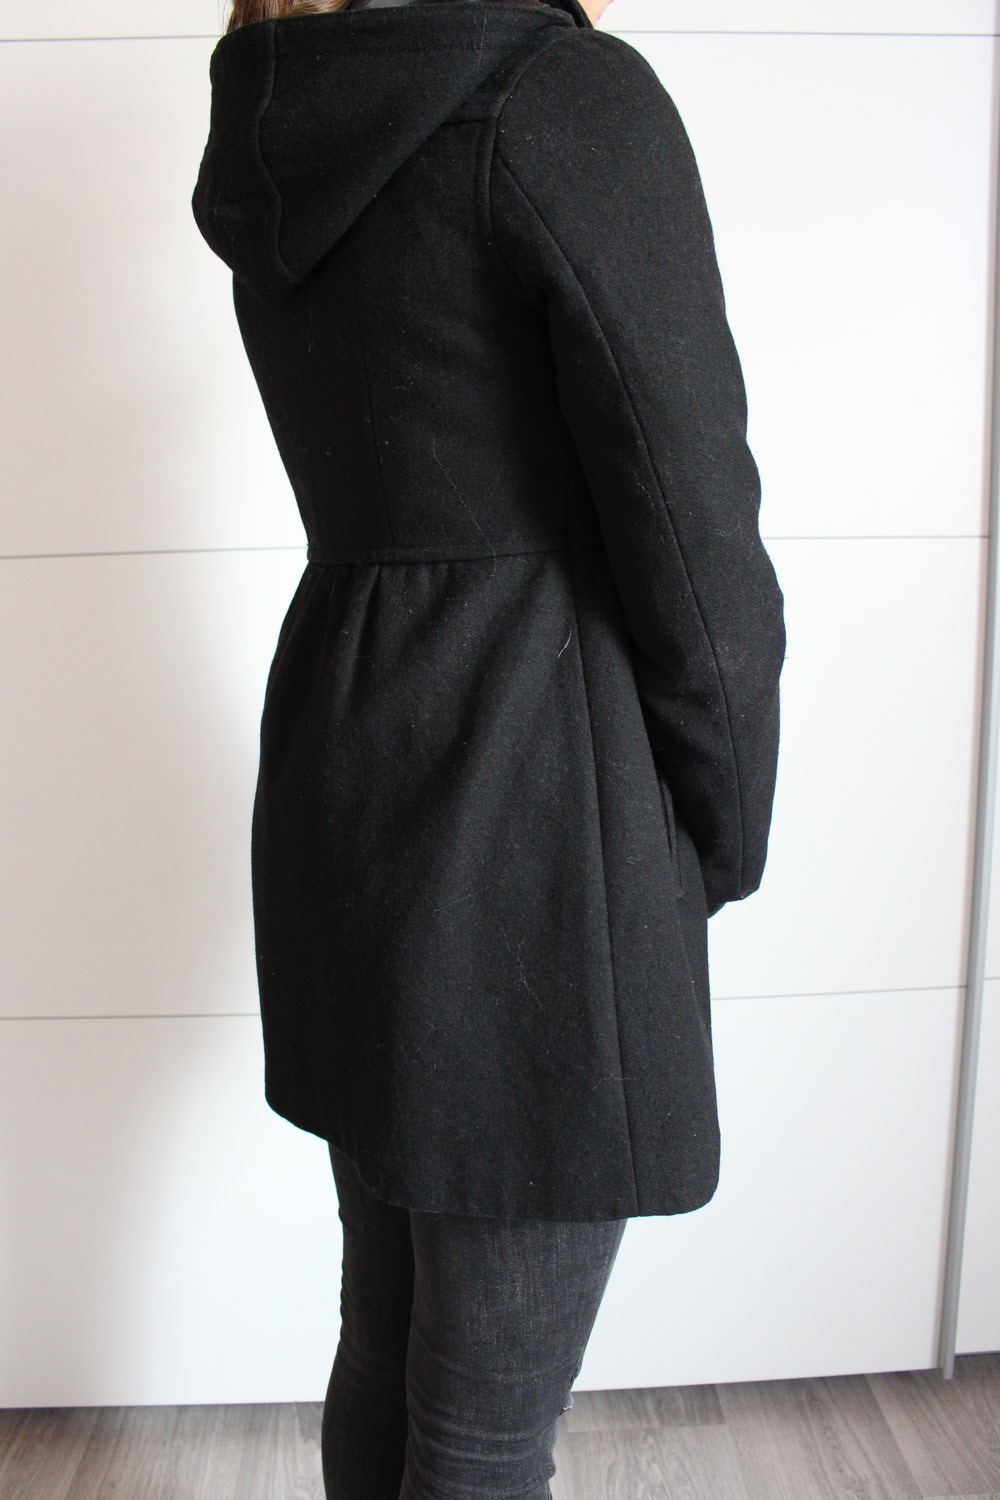 schwarzer Mantel mit Kapuze